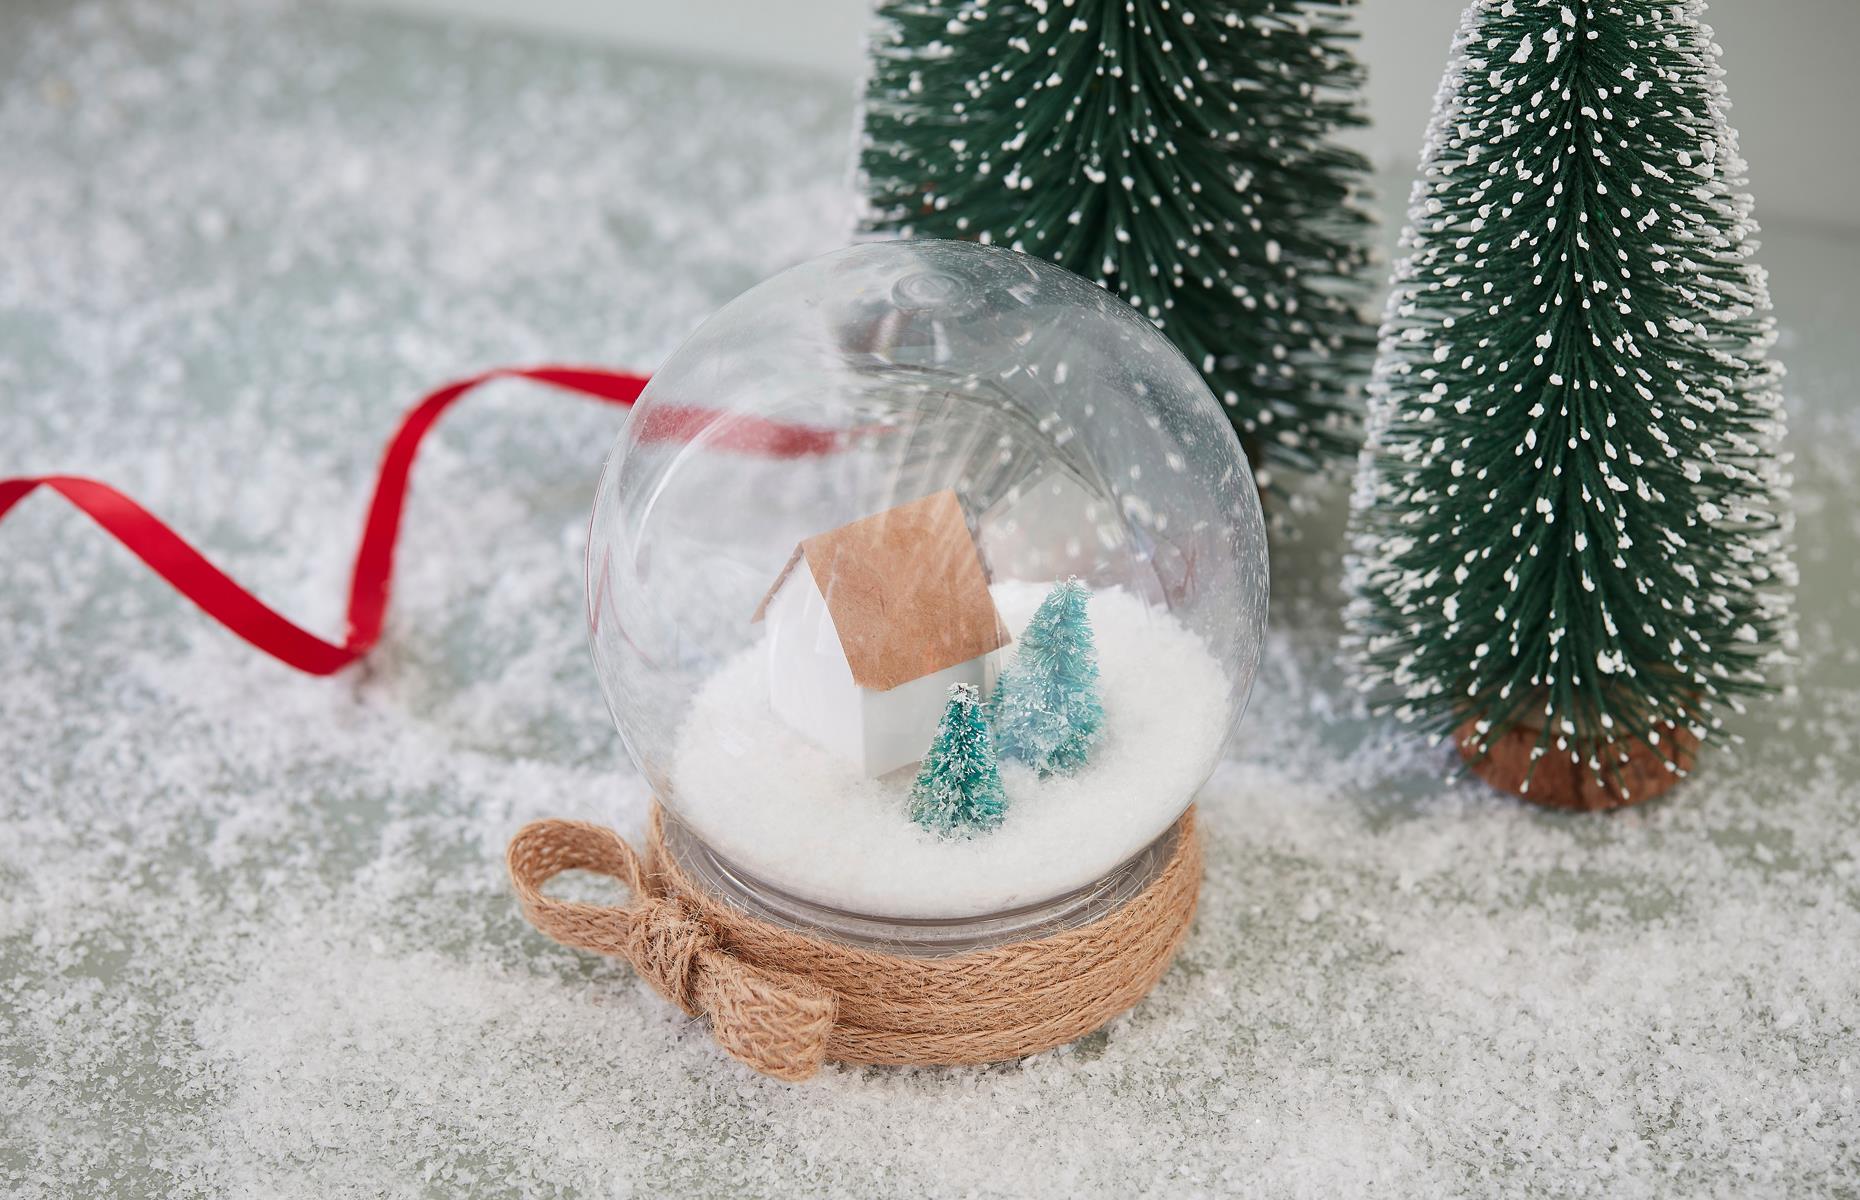 Make snow globes